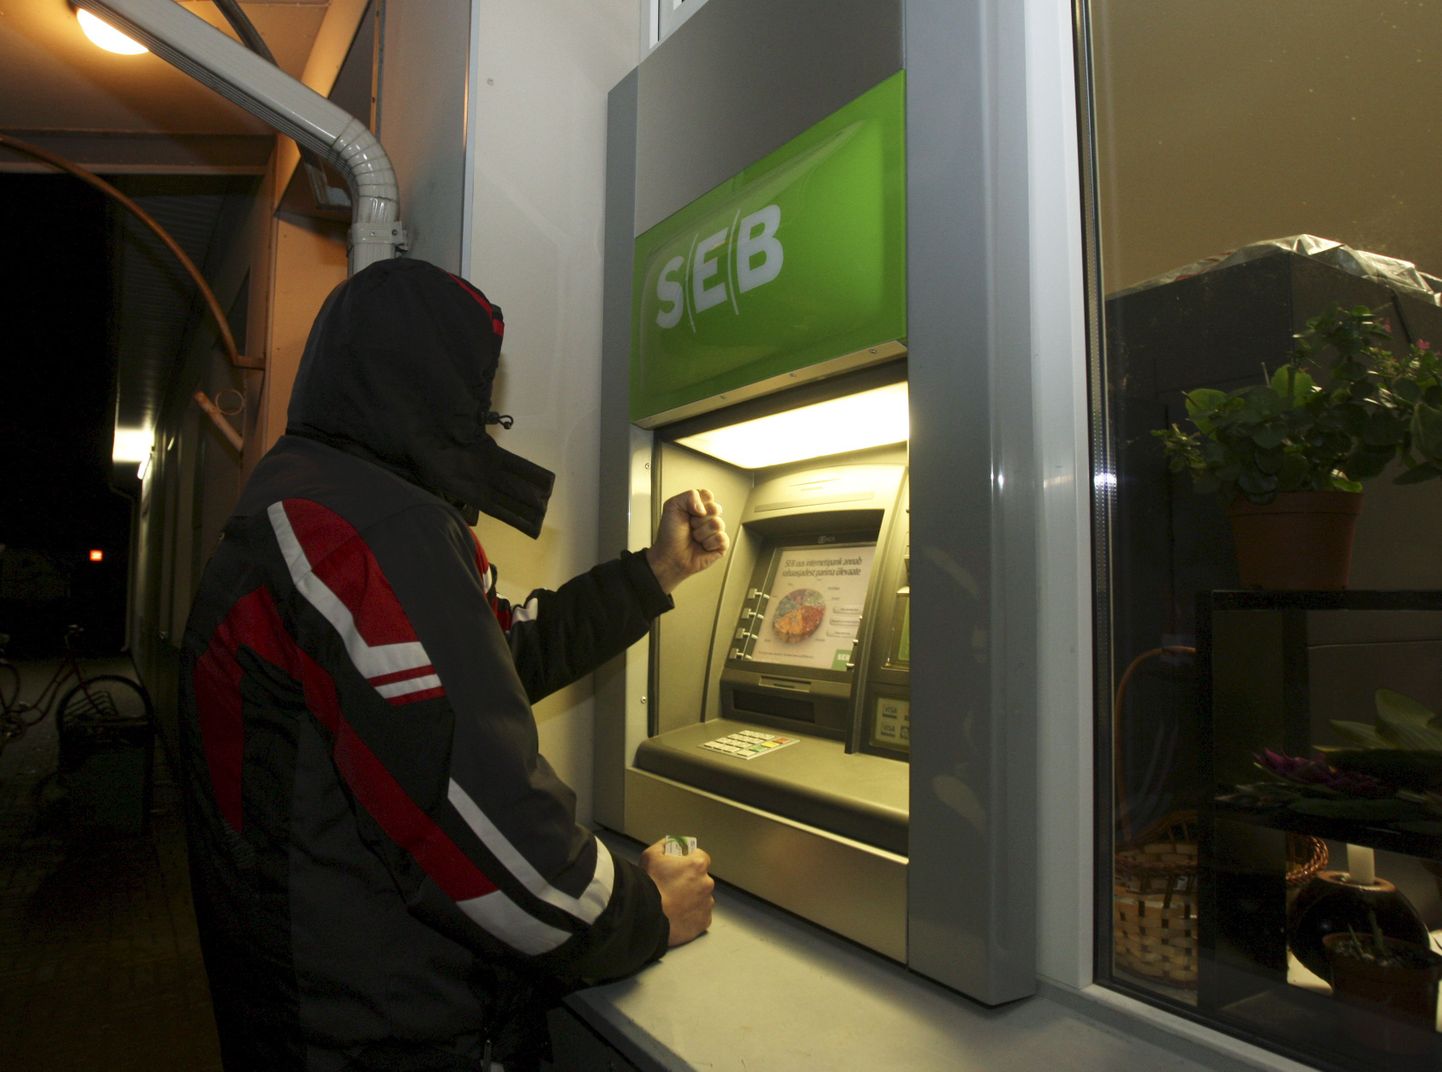 SEB pangaautomaat.